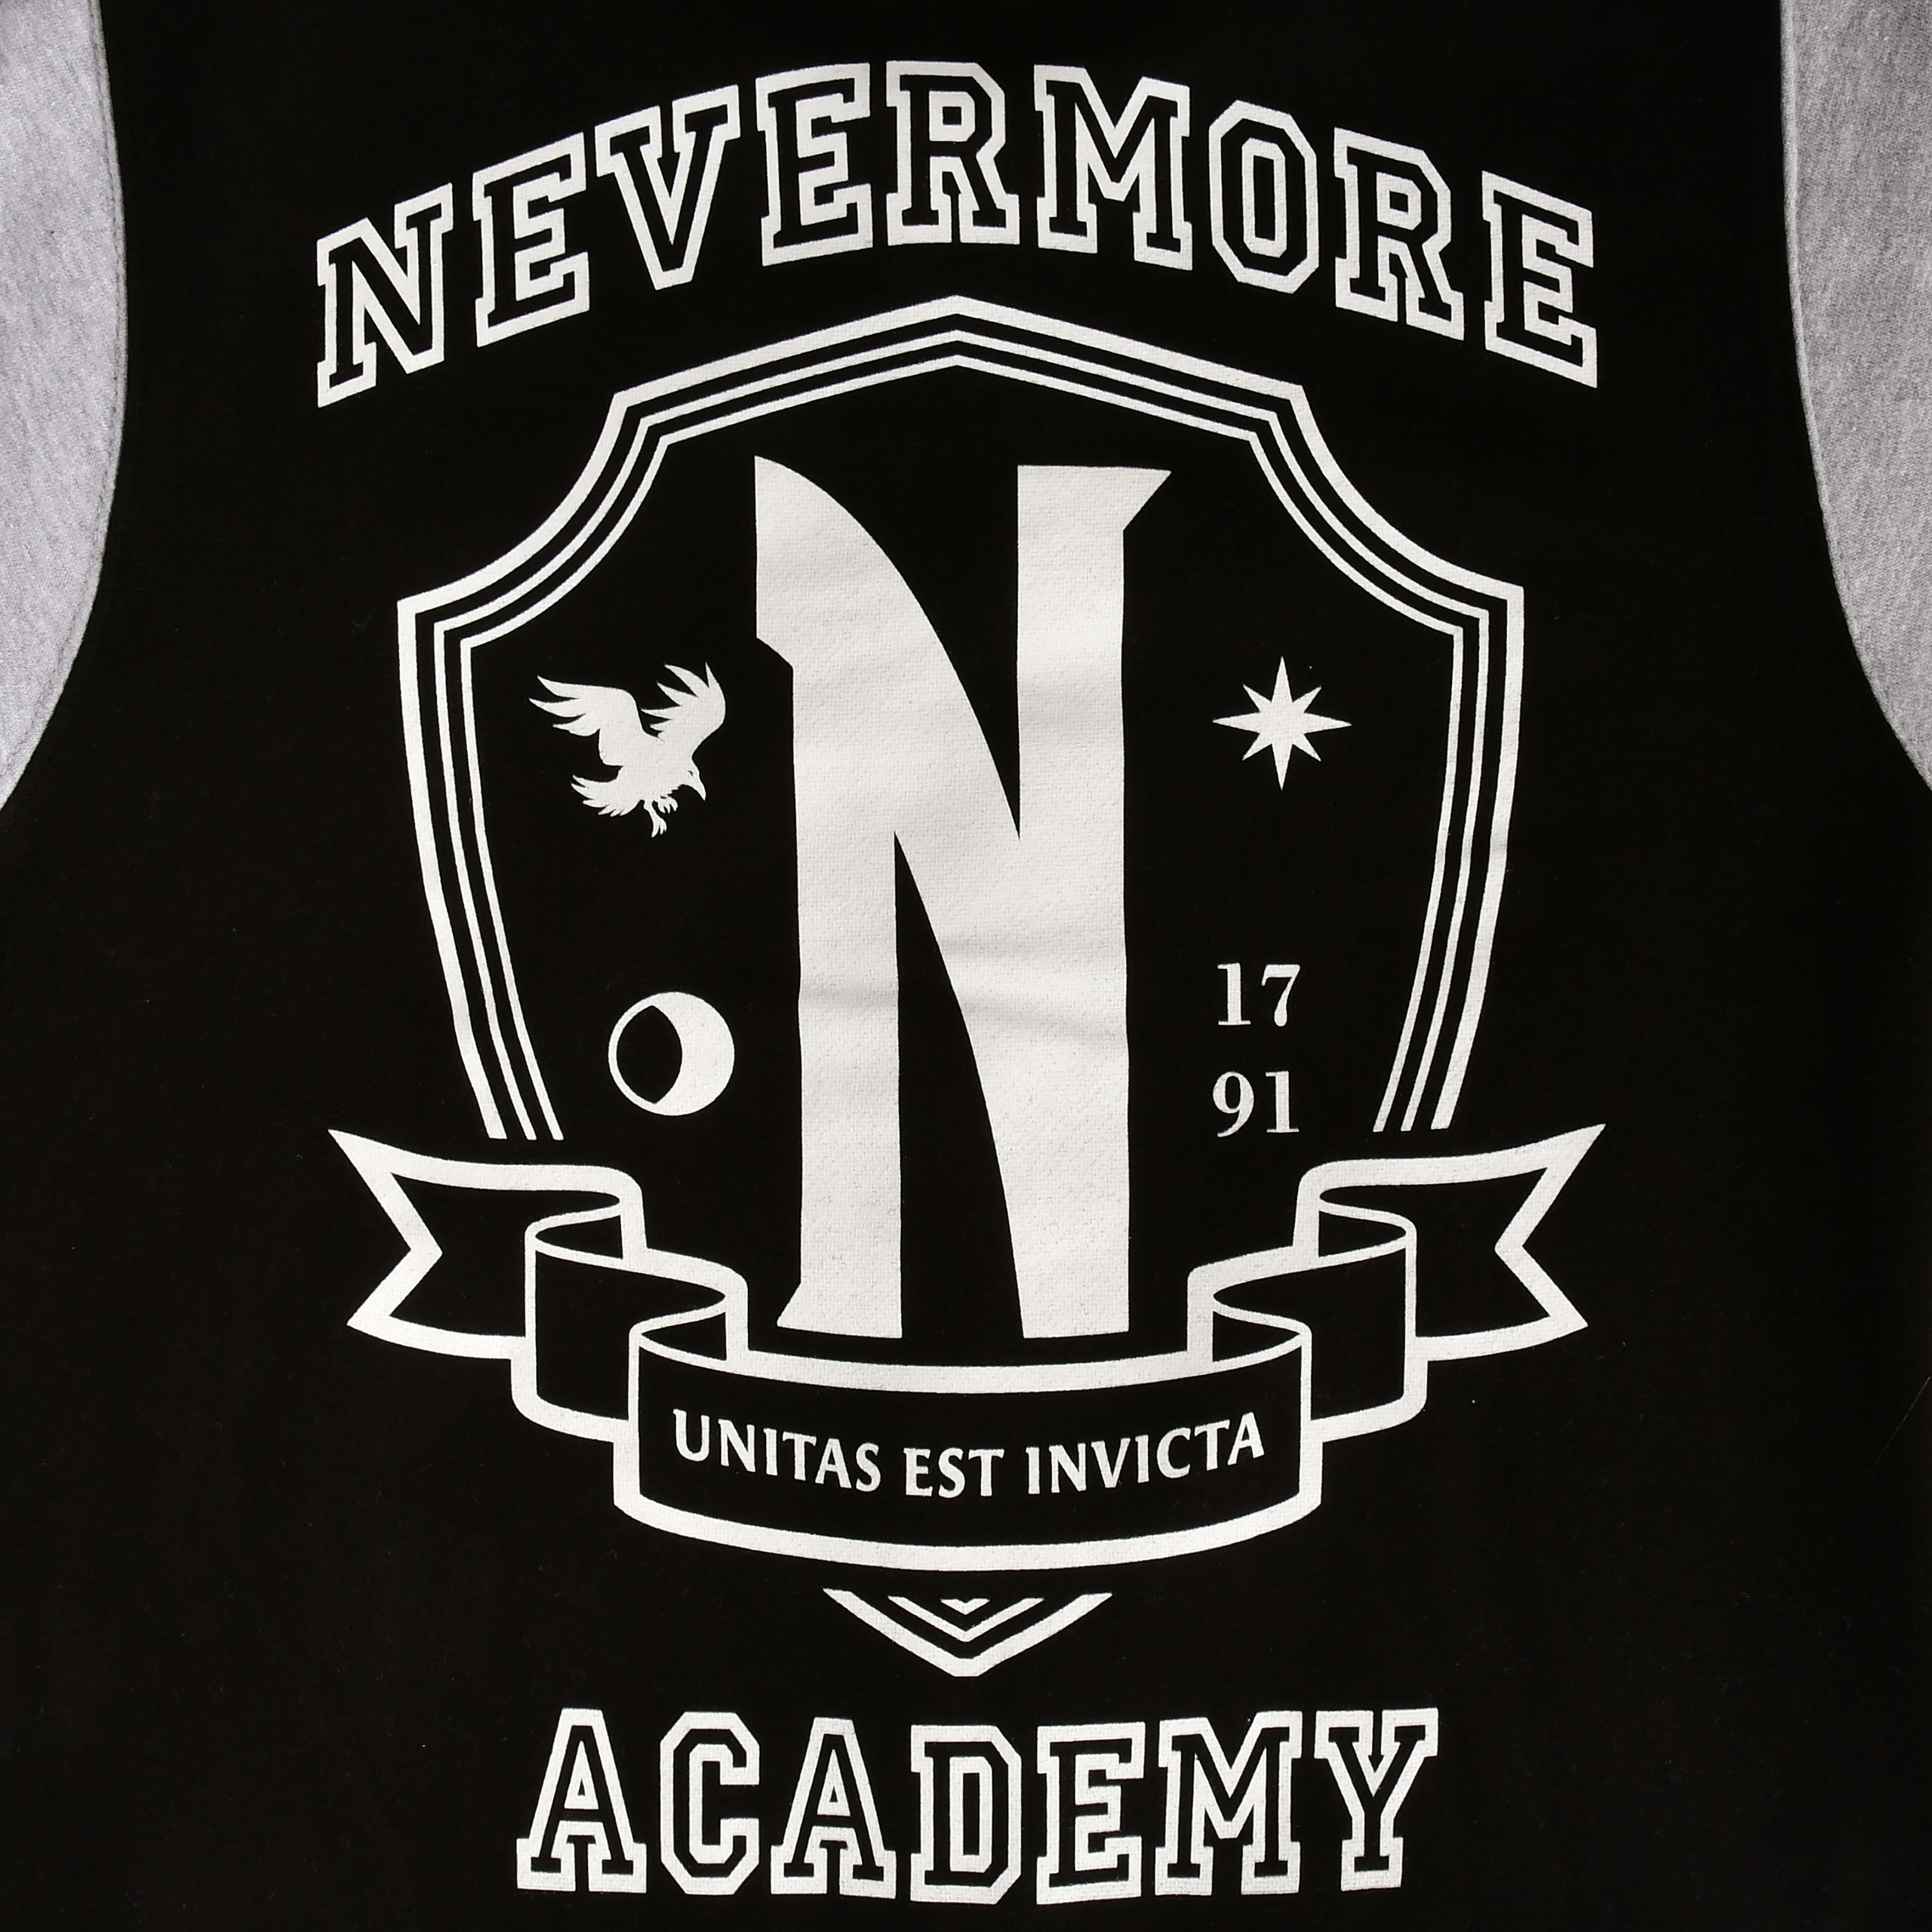 Wednesday - Nevermore Academy College Jas